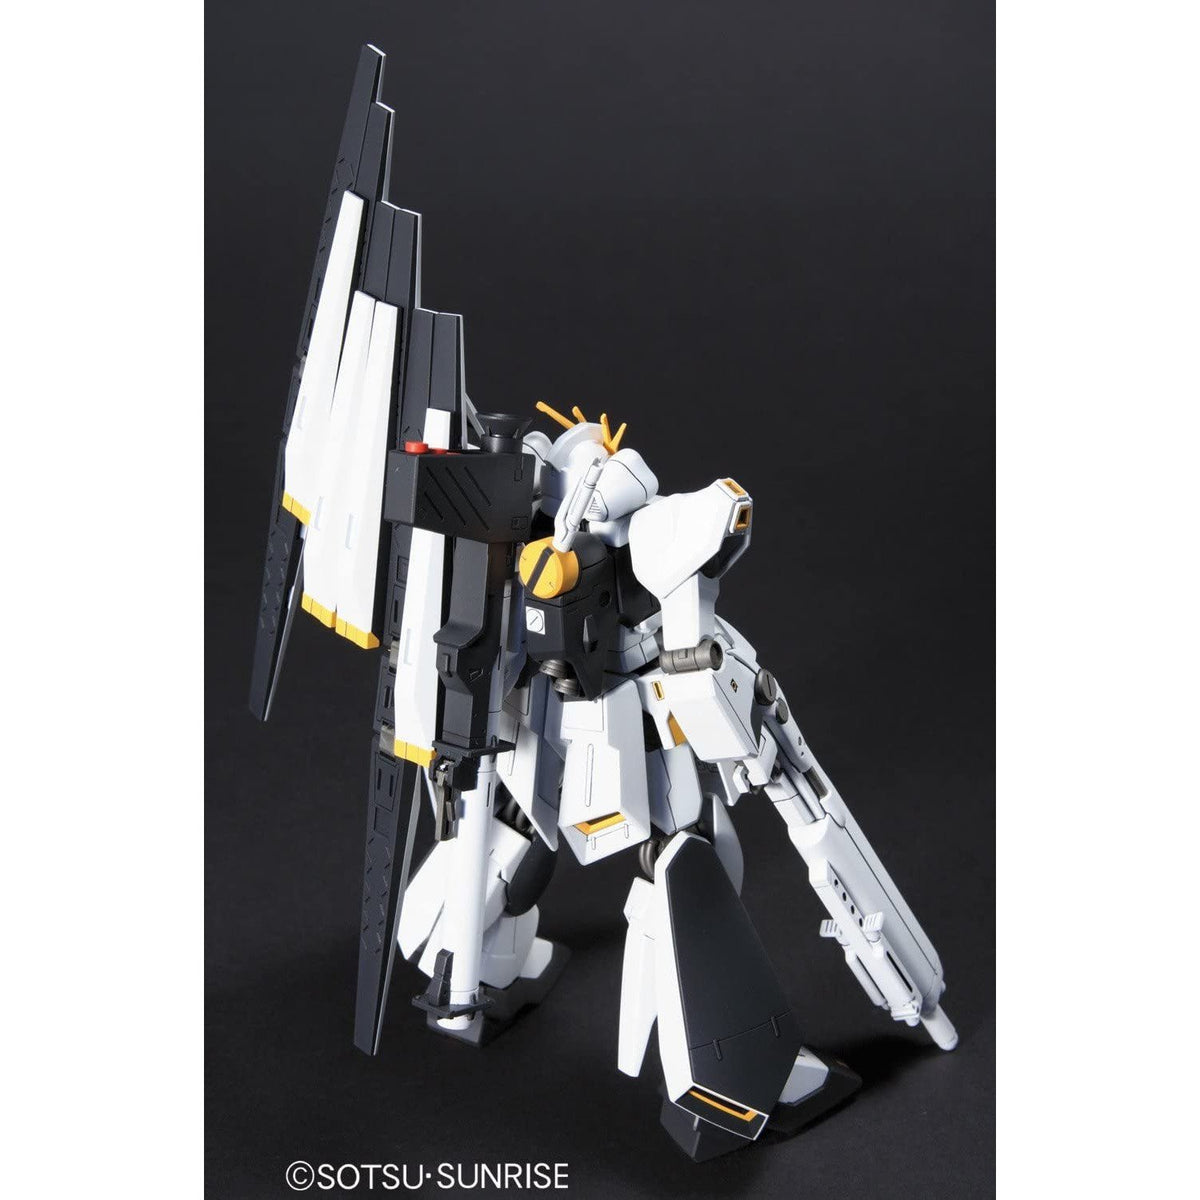 Gunpla HGUC 1/144 Nu Gundam (Heavy Weapon System)-Bandai-Ace Cards &amp; Collectibles